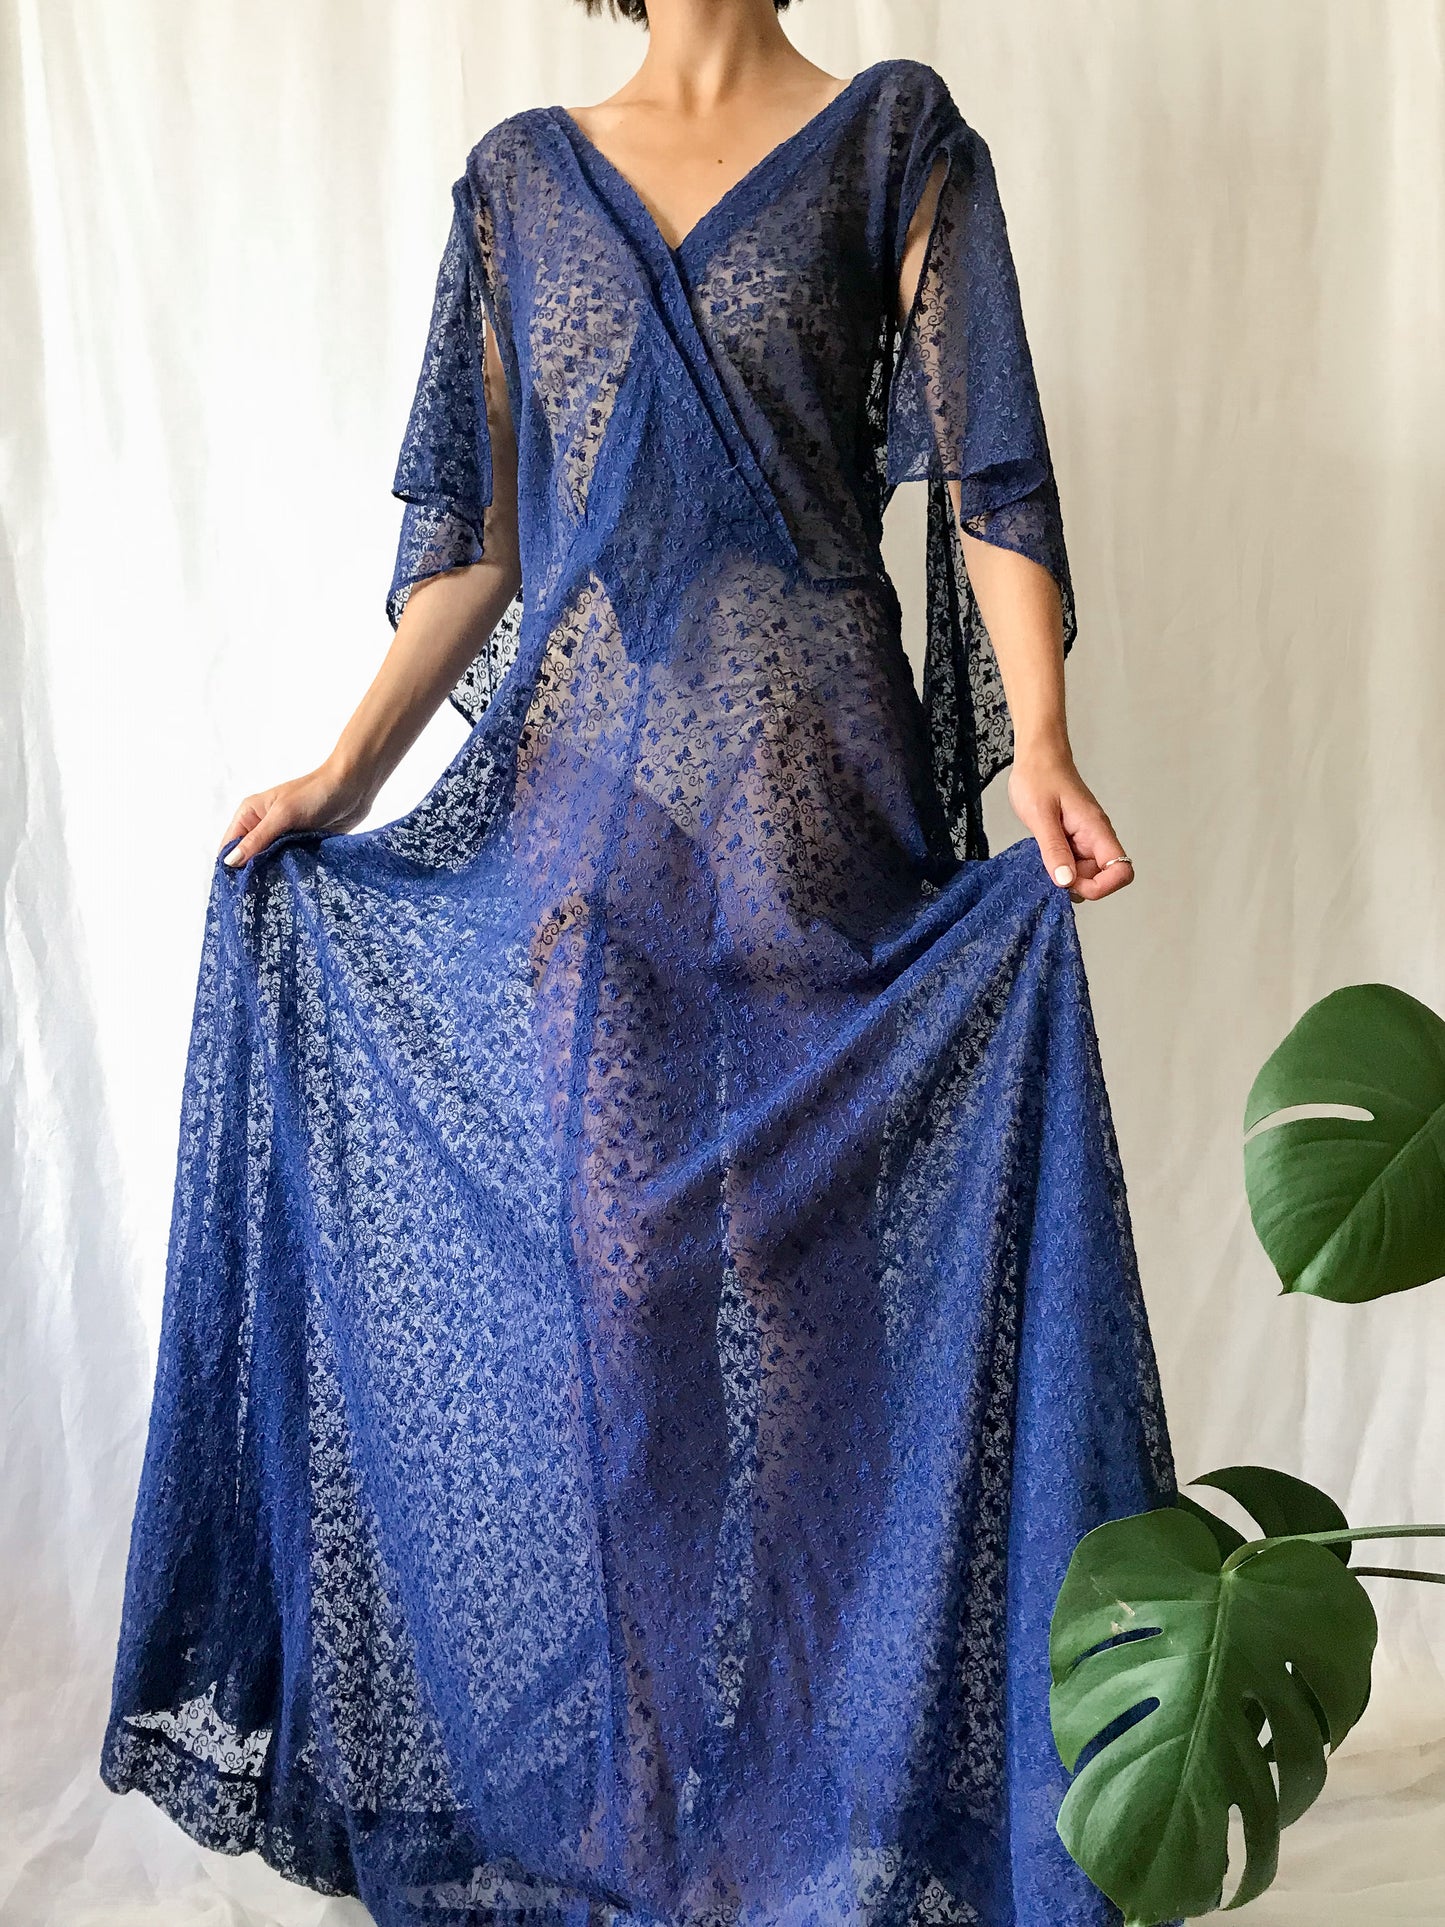 1940s Blue Net Lace Evening Gown